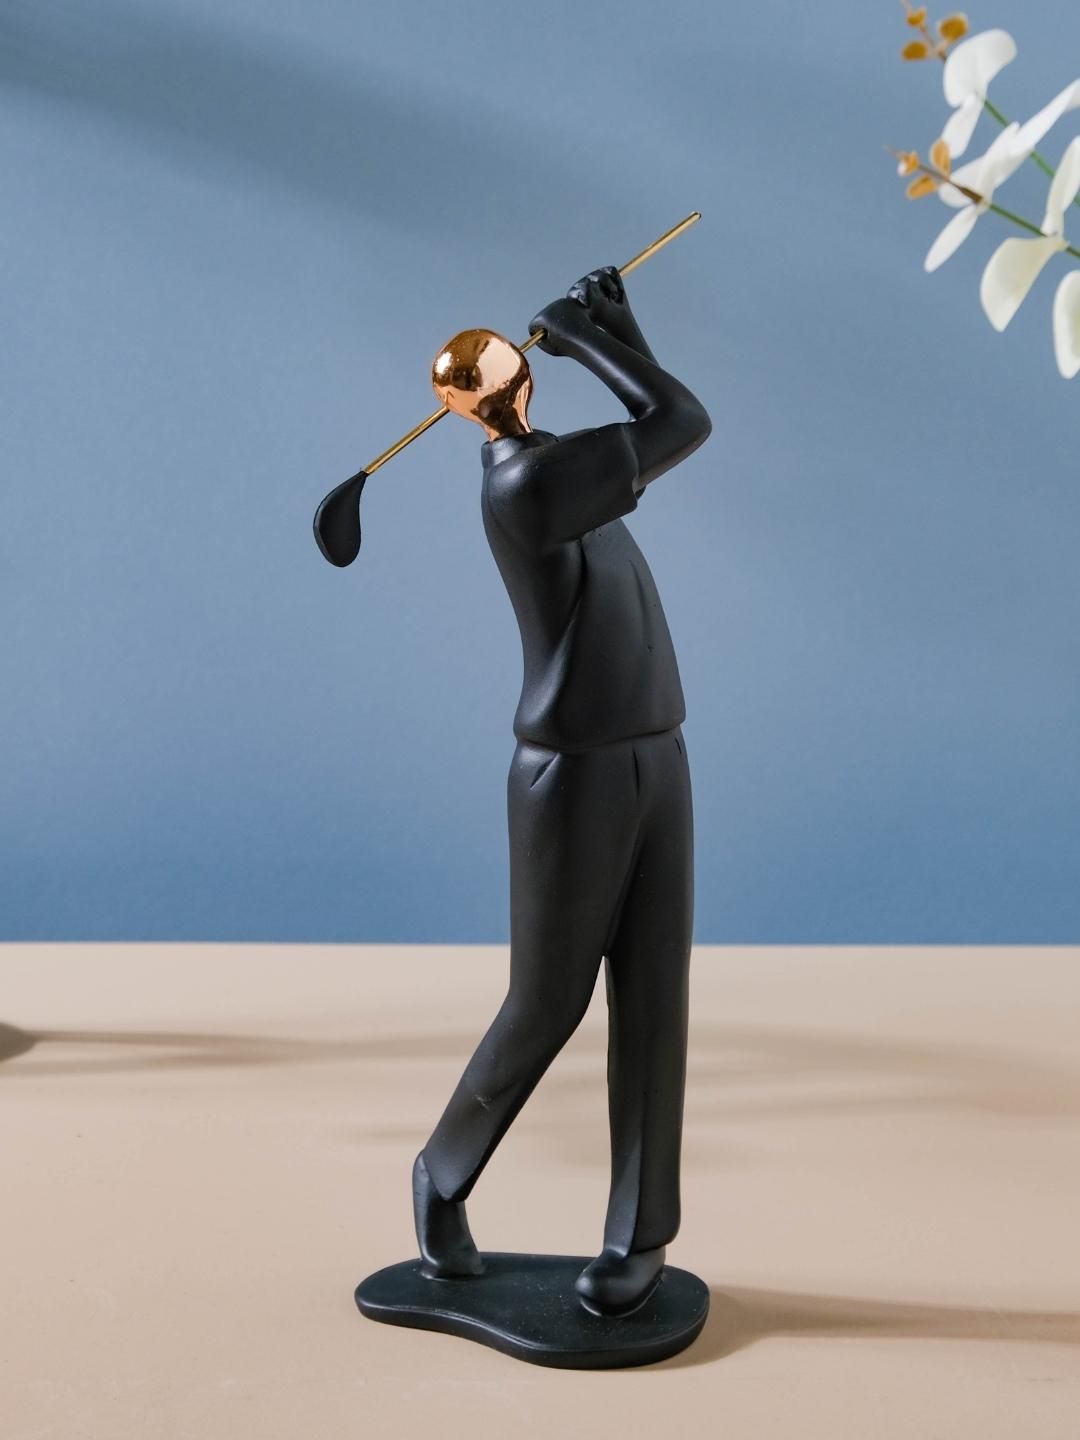 Nestasia Black & Gold-Toned Golf Athlete Figurine Showpiece Price in India